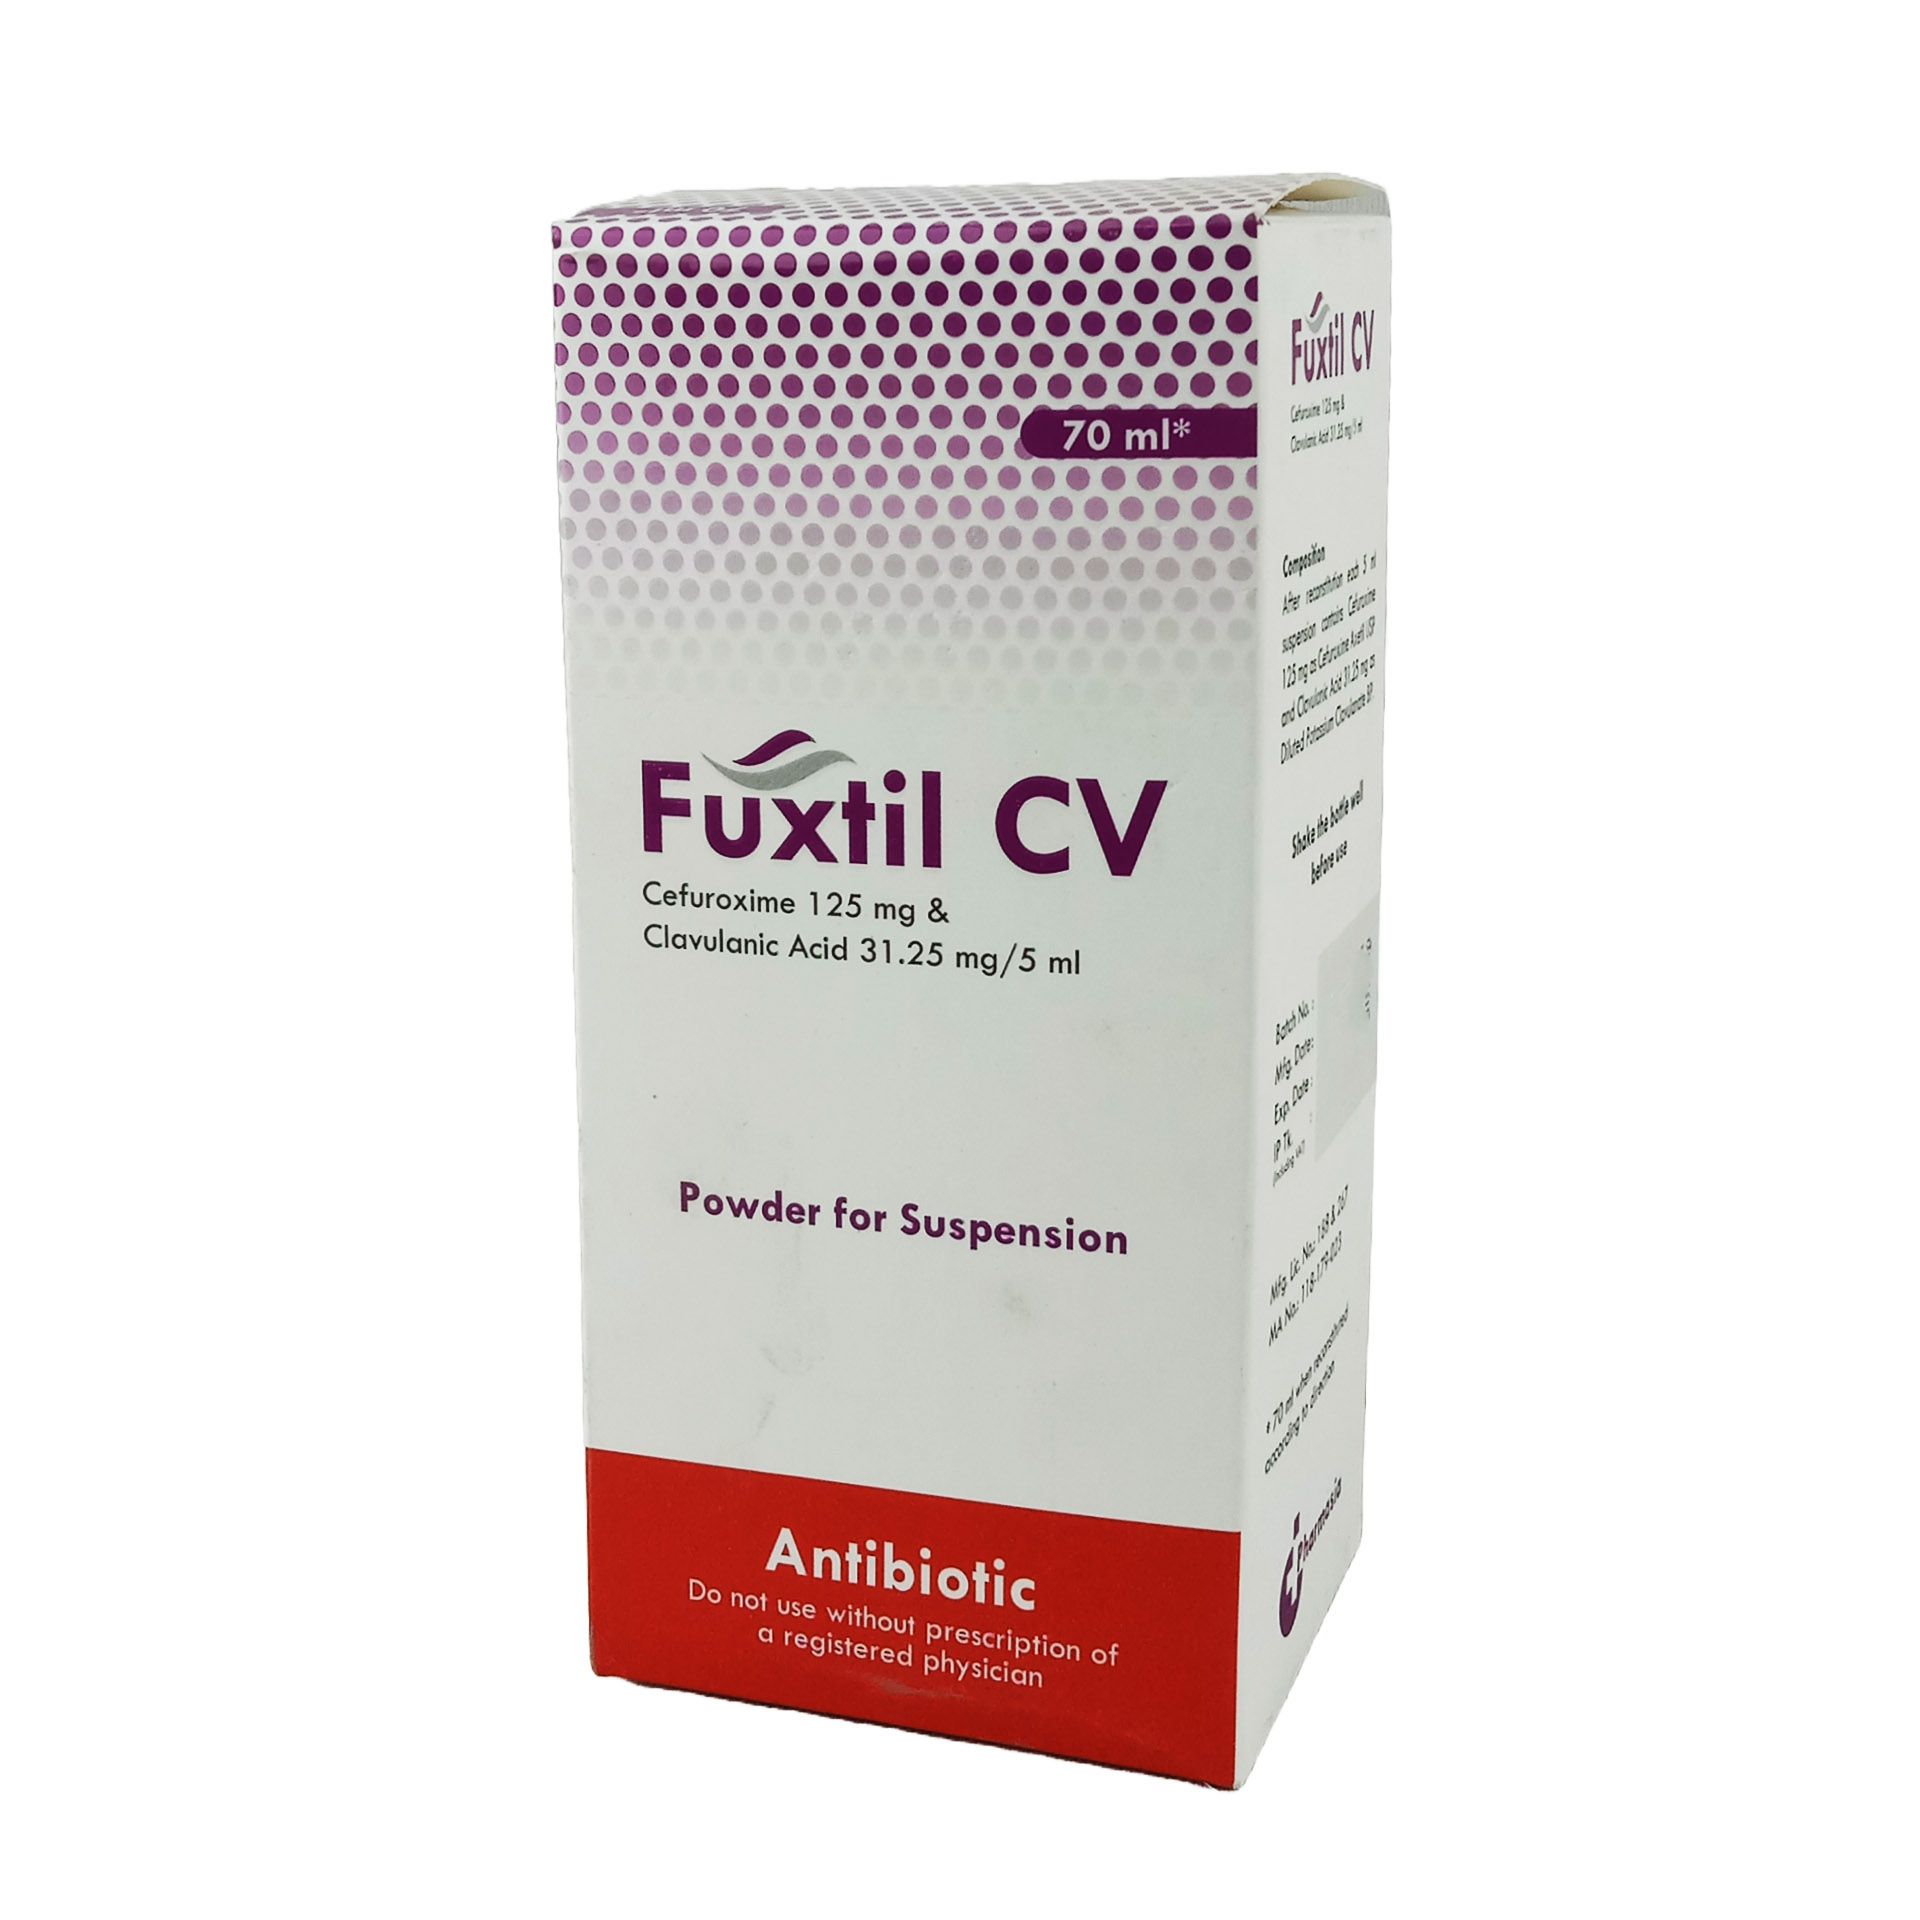 Fuxtil CV 125mg+31.25mg/5ml Powder for Suspension